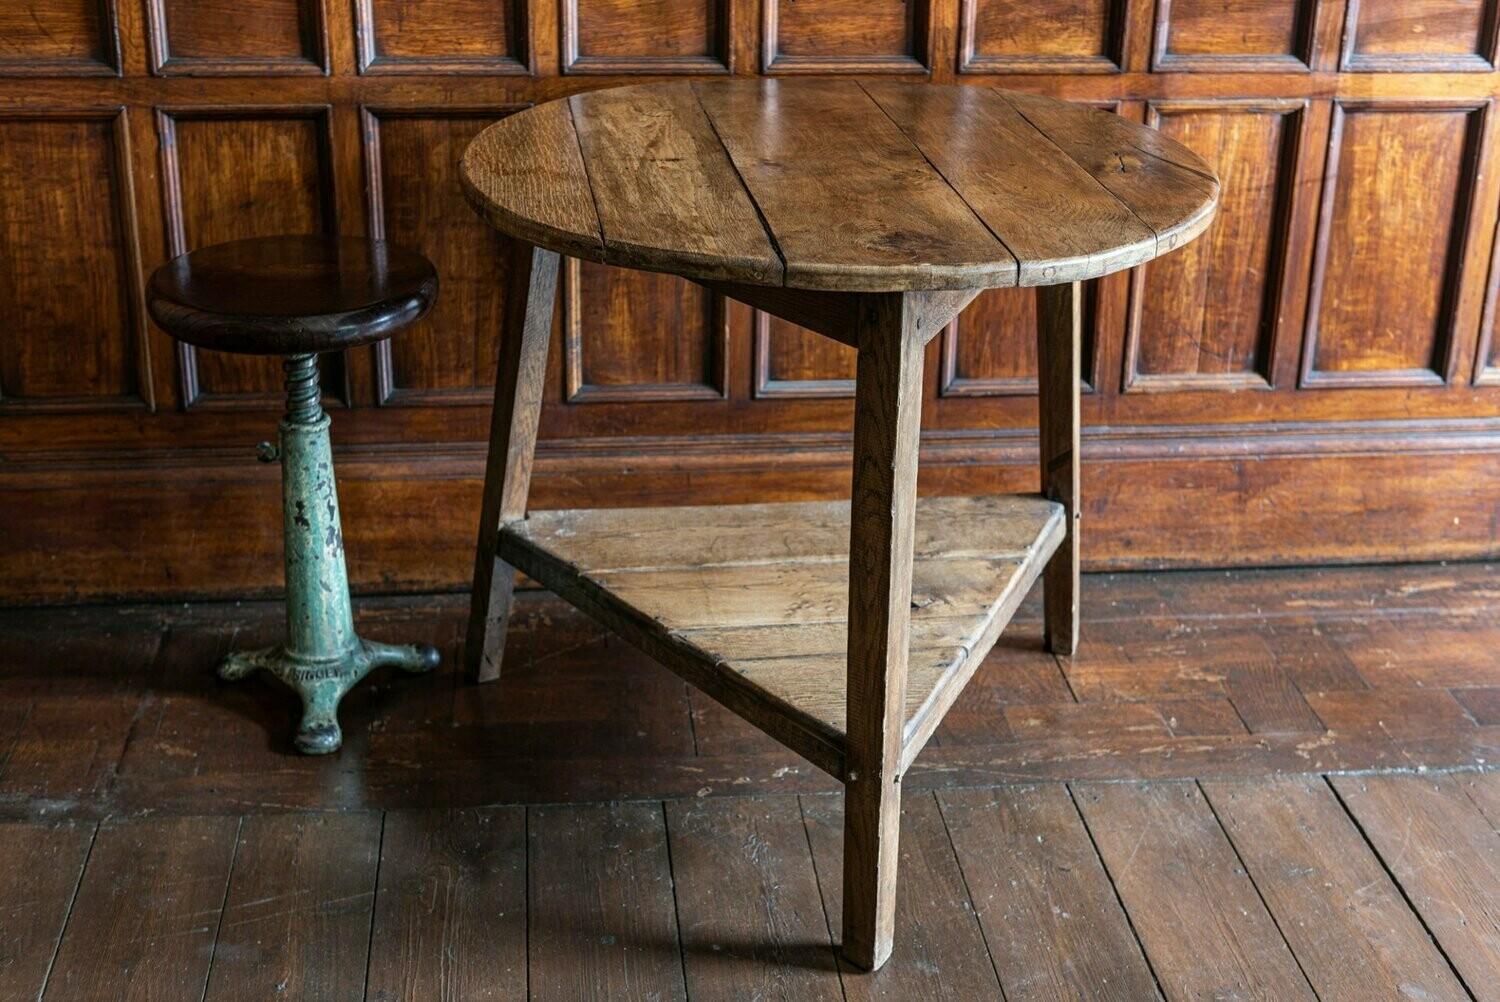 19th century oversized English oak cricket table.
Pegged construction

Size: Height 77 cm x diameter 84 cm.